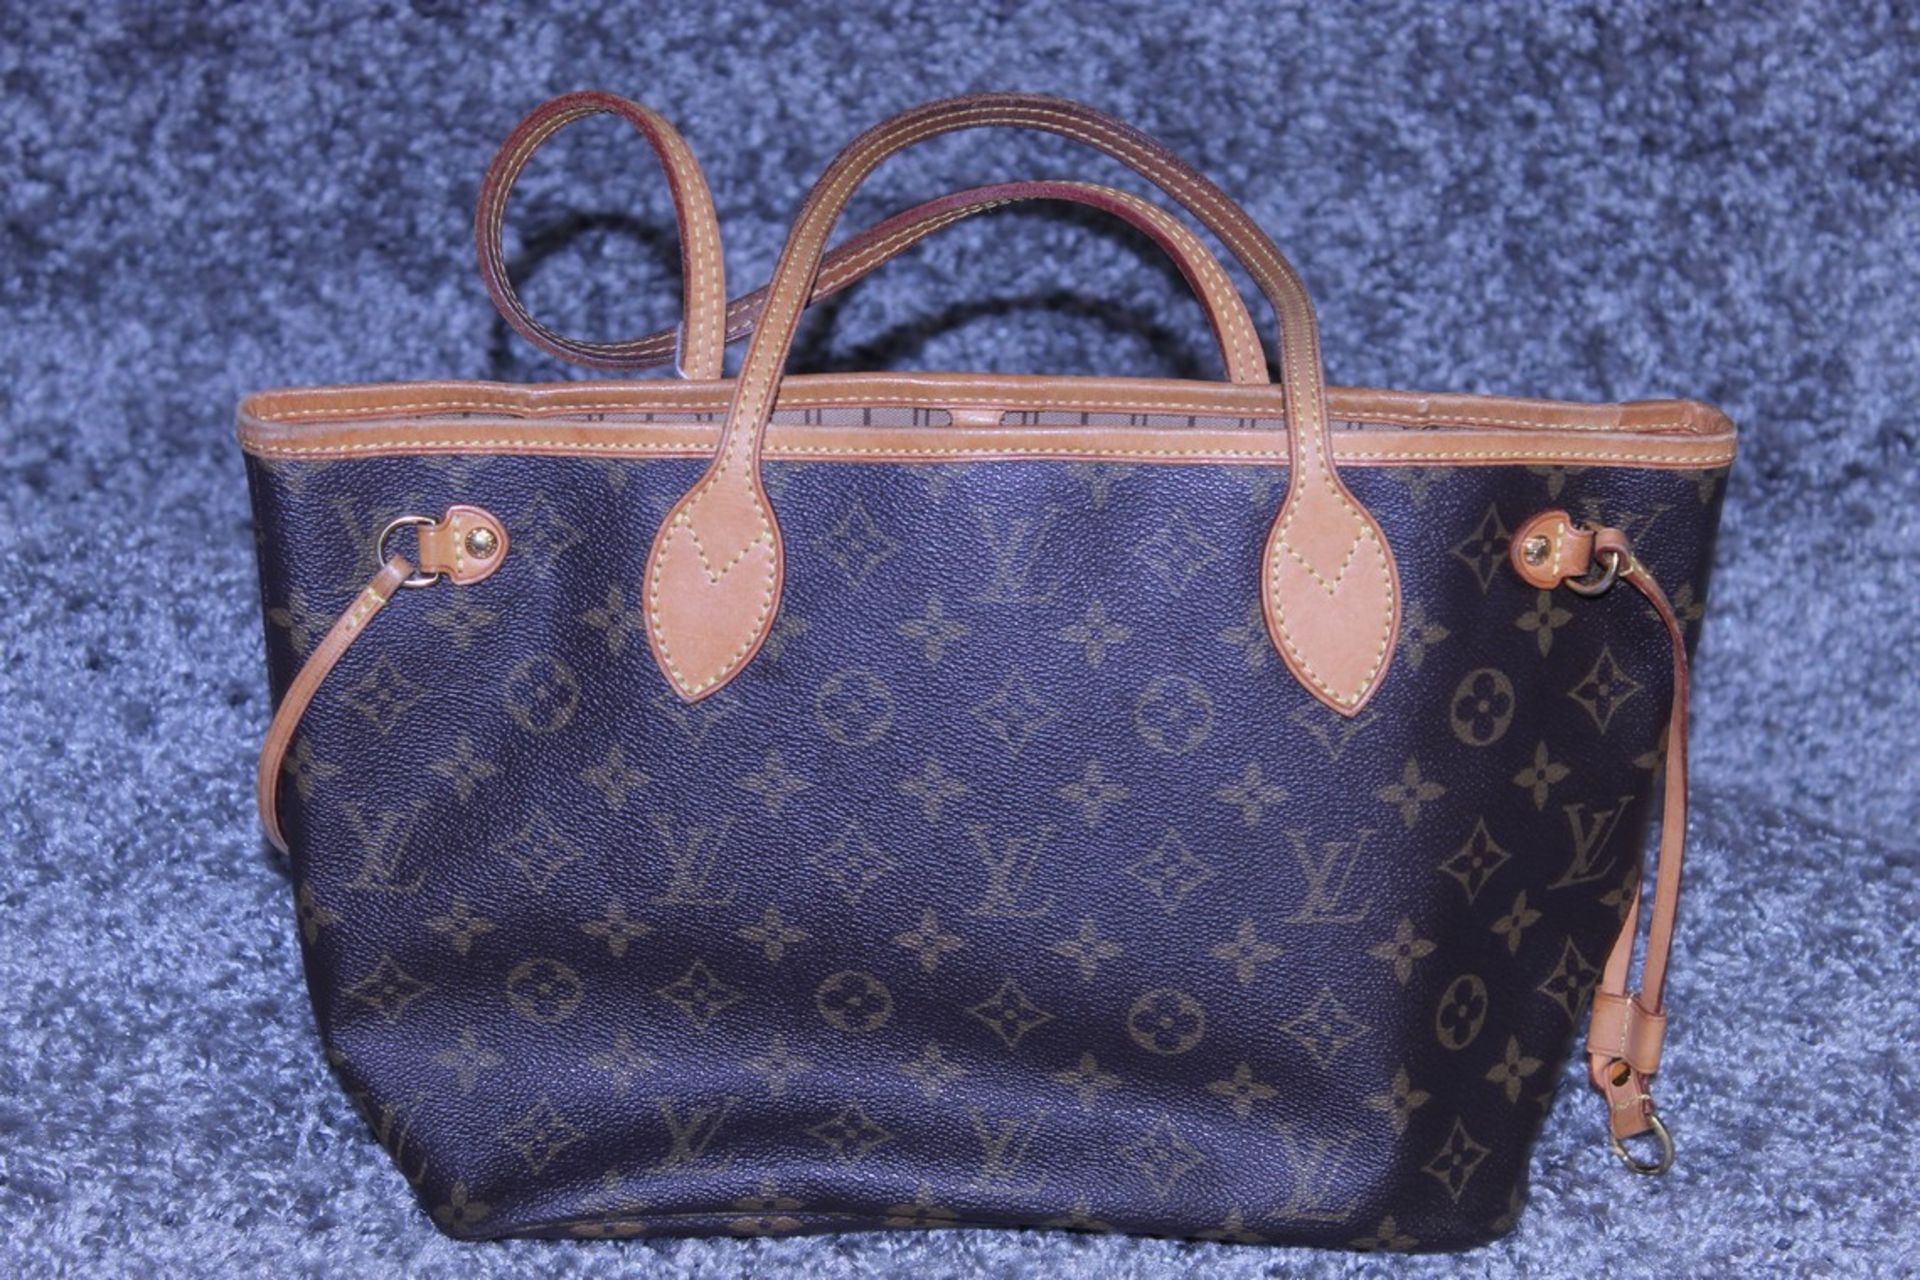 Rrp £1,500 Louis Vuitton Neverfull Shoulder Bag